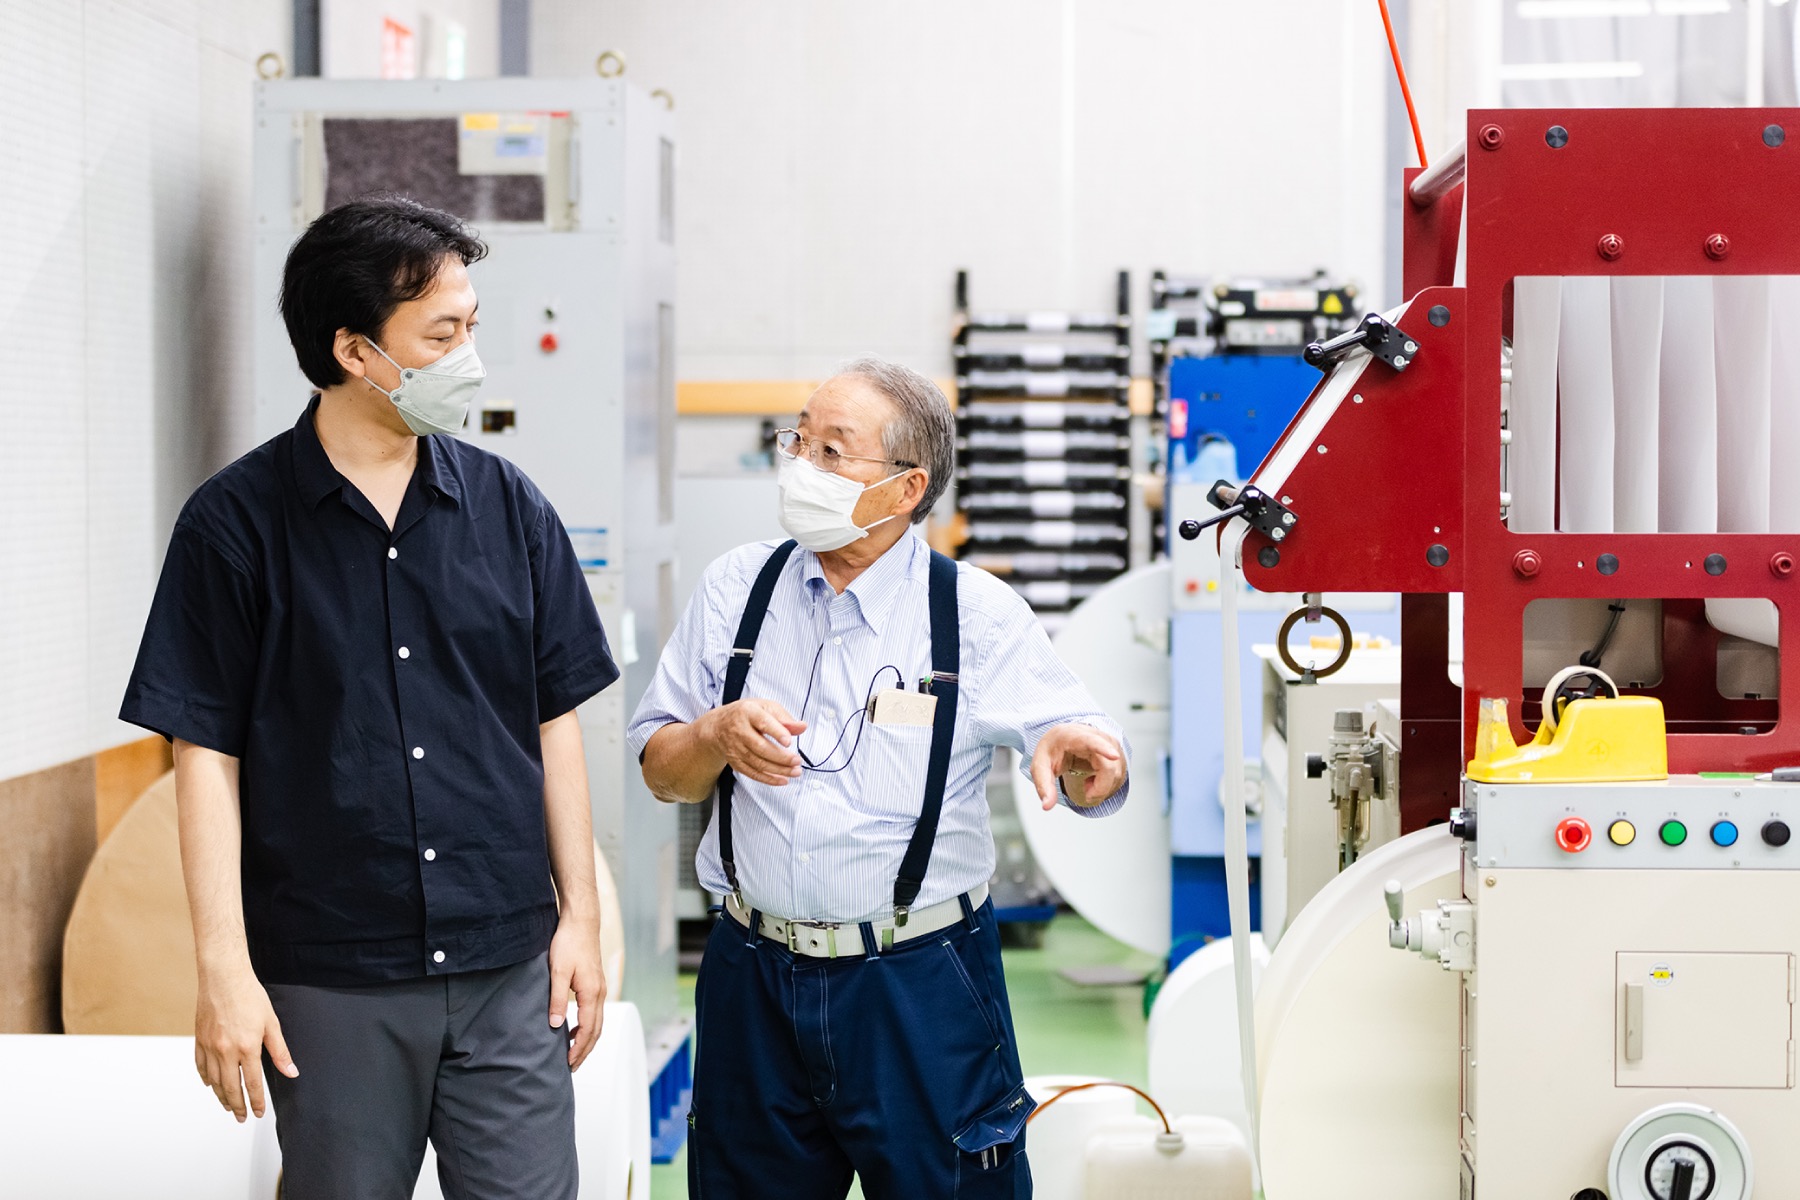 Mr. Yuyama receives an explanation from Mr. Fukuda regarding the printing process.